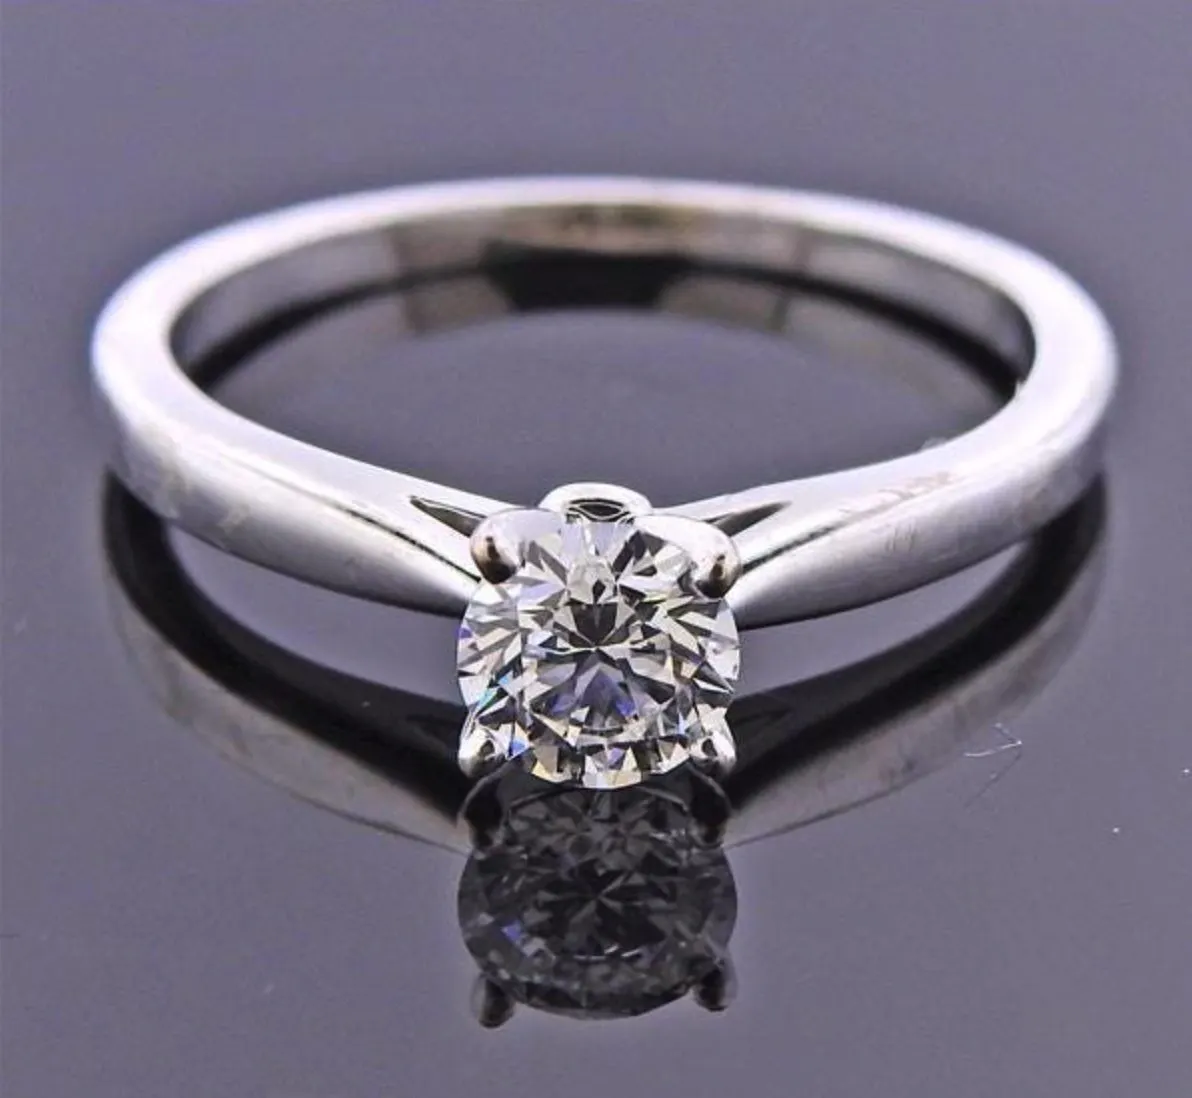 grading lab-grown diamonds - engagement ring